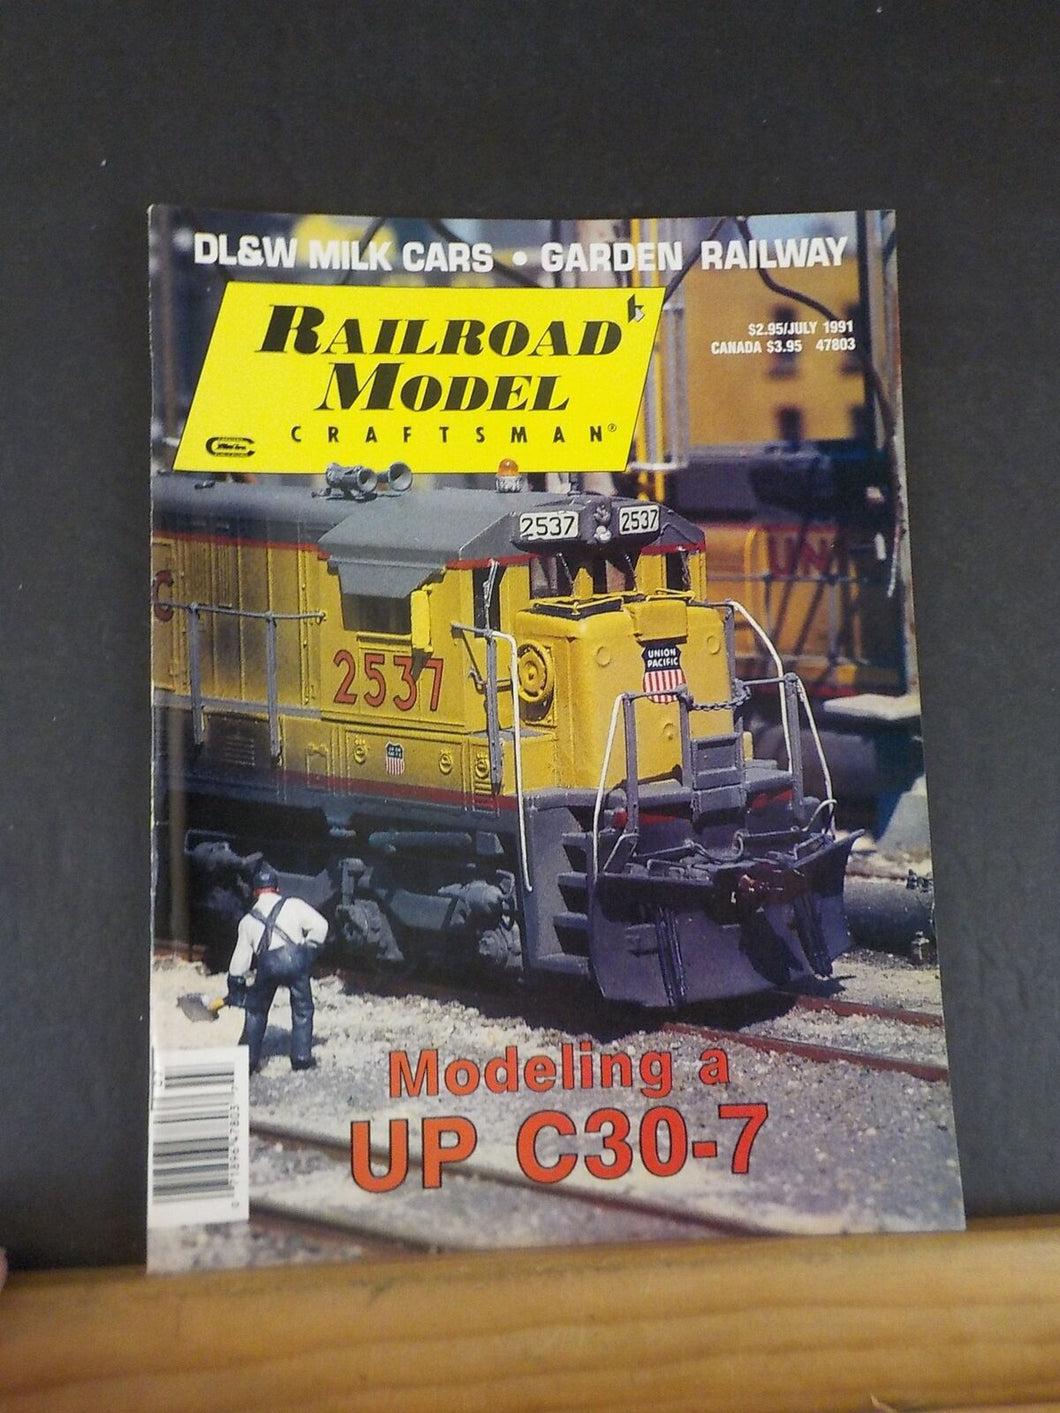 Railroad Model Craftsman Magazine 1991 July Modeling UP C307 DL&W Milk cars